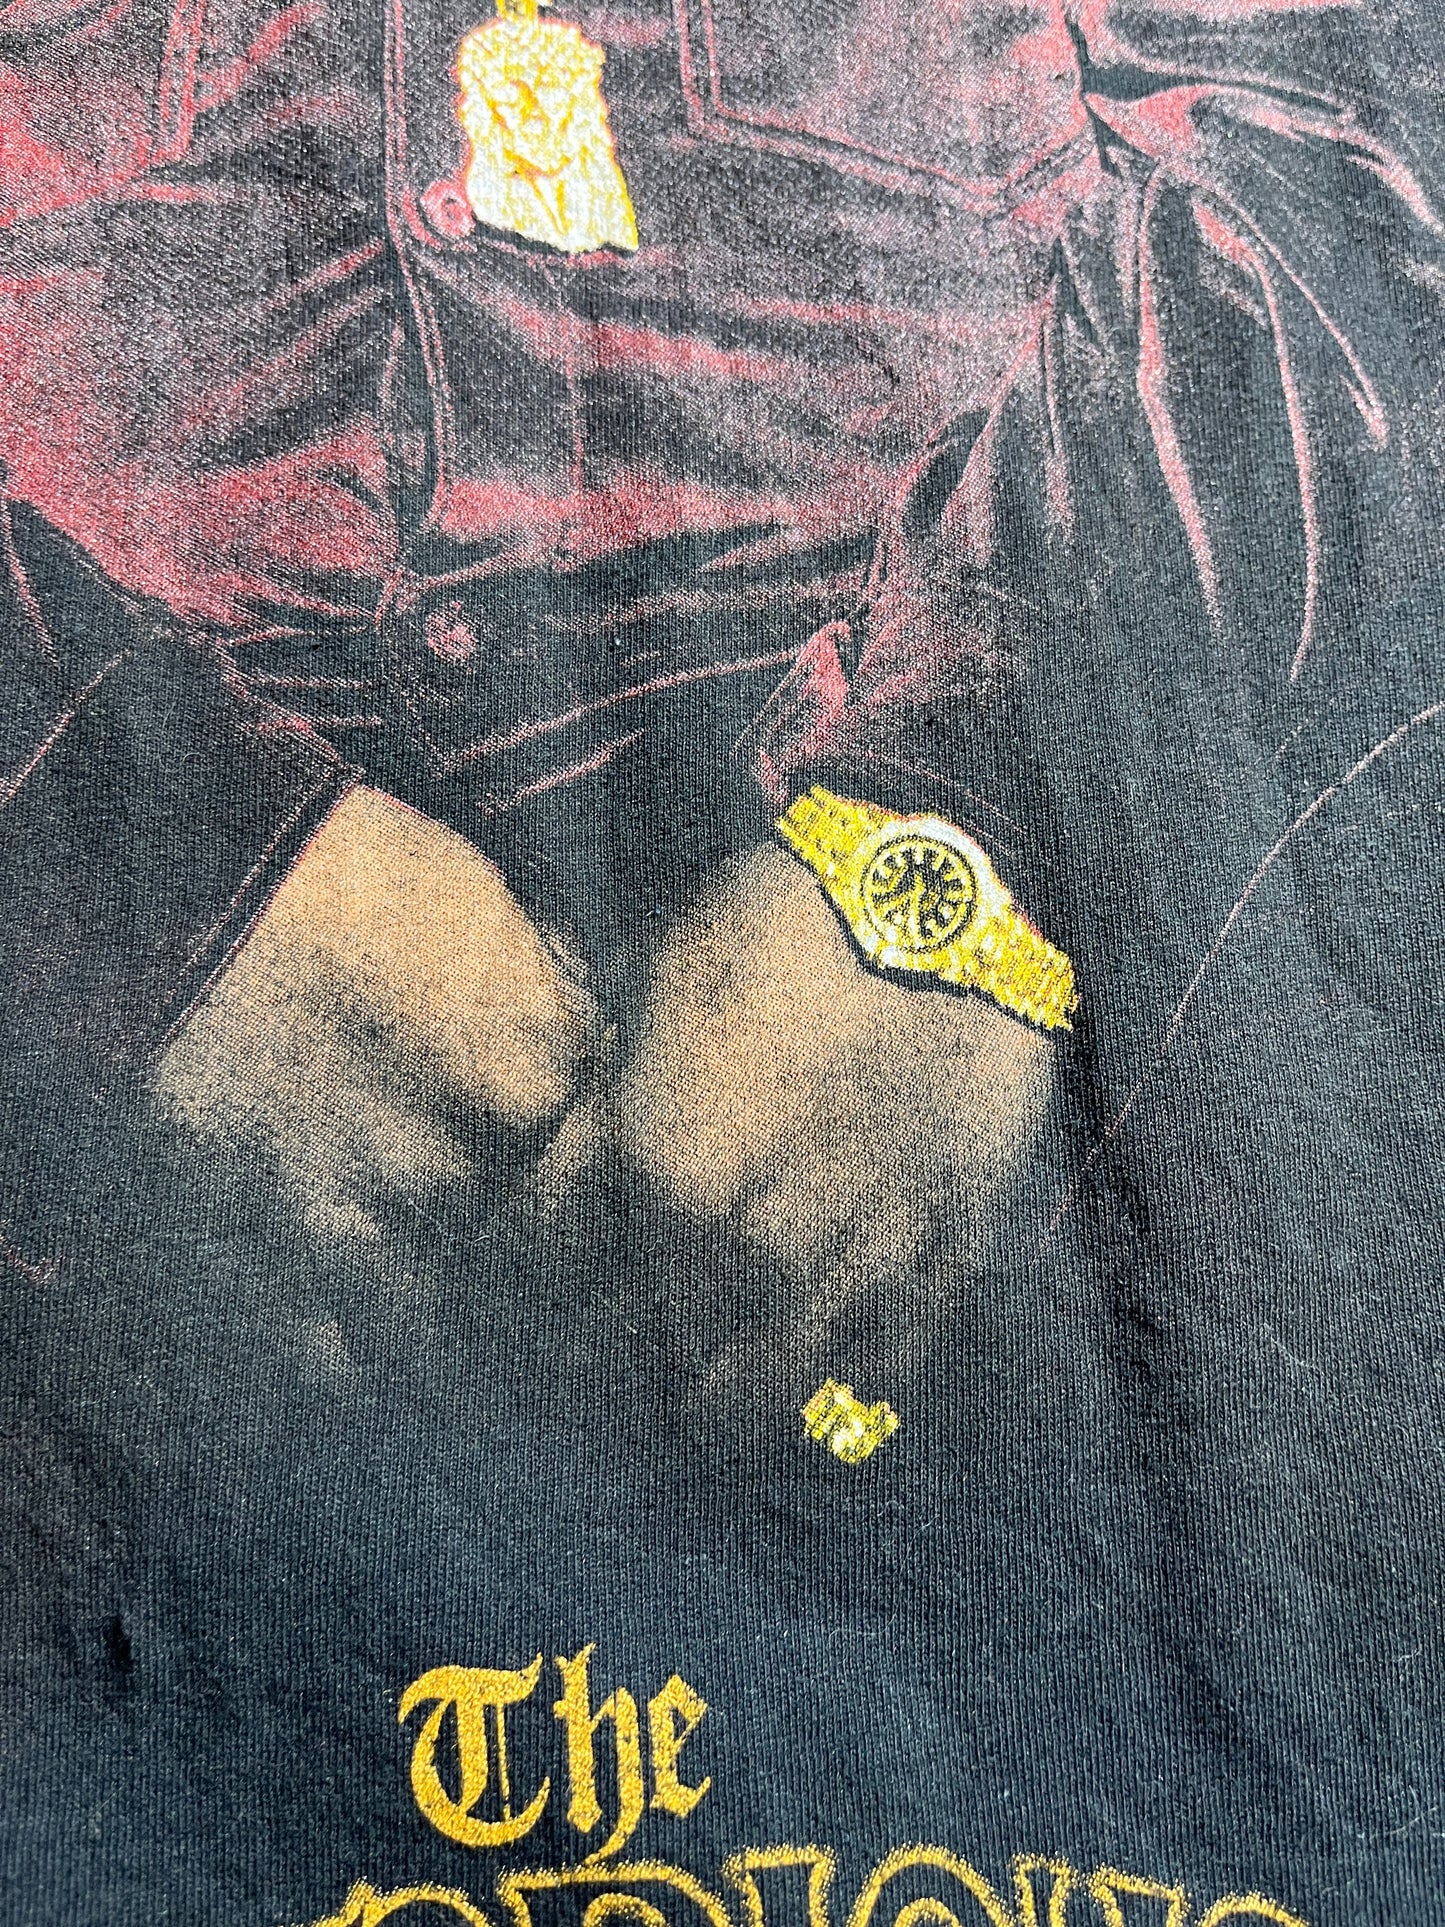 Vintage Biggie T-Shirt Notorious B.I.G. Rap Tee